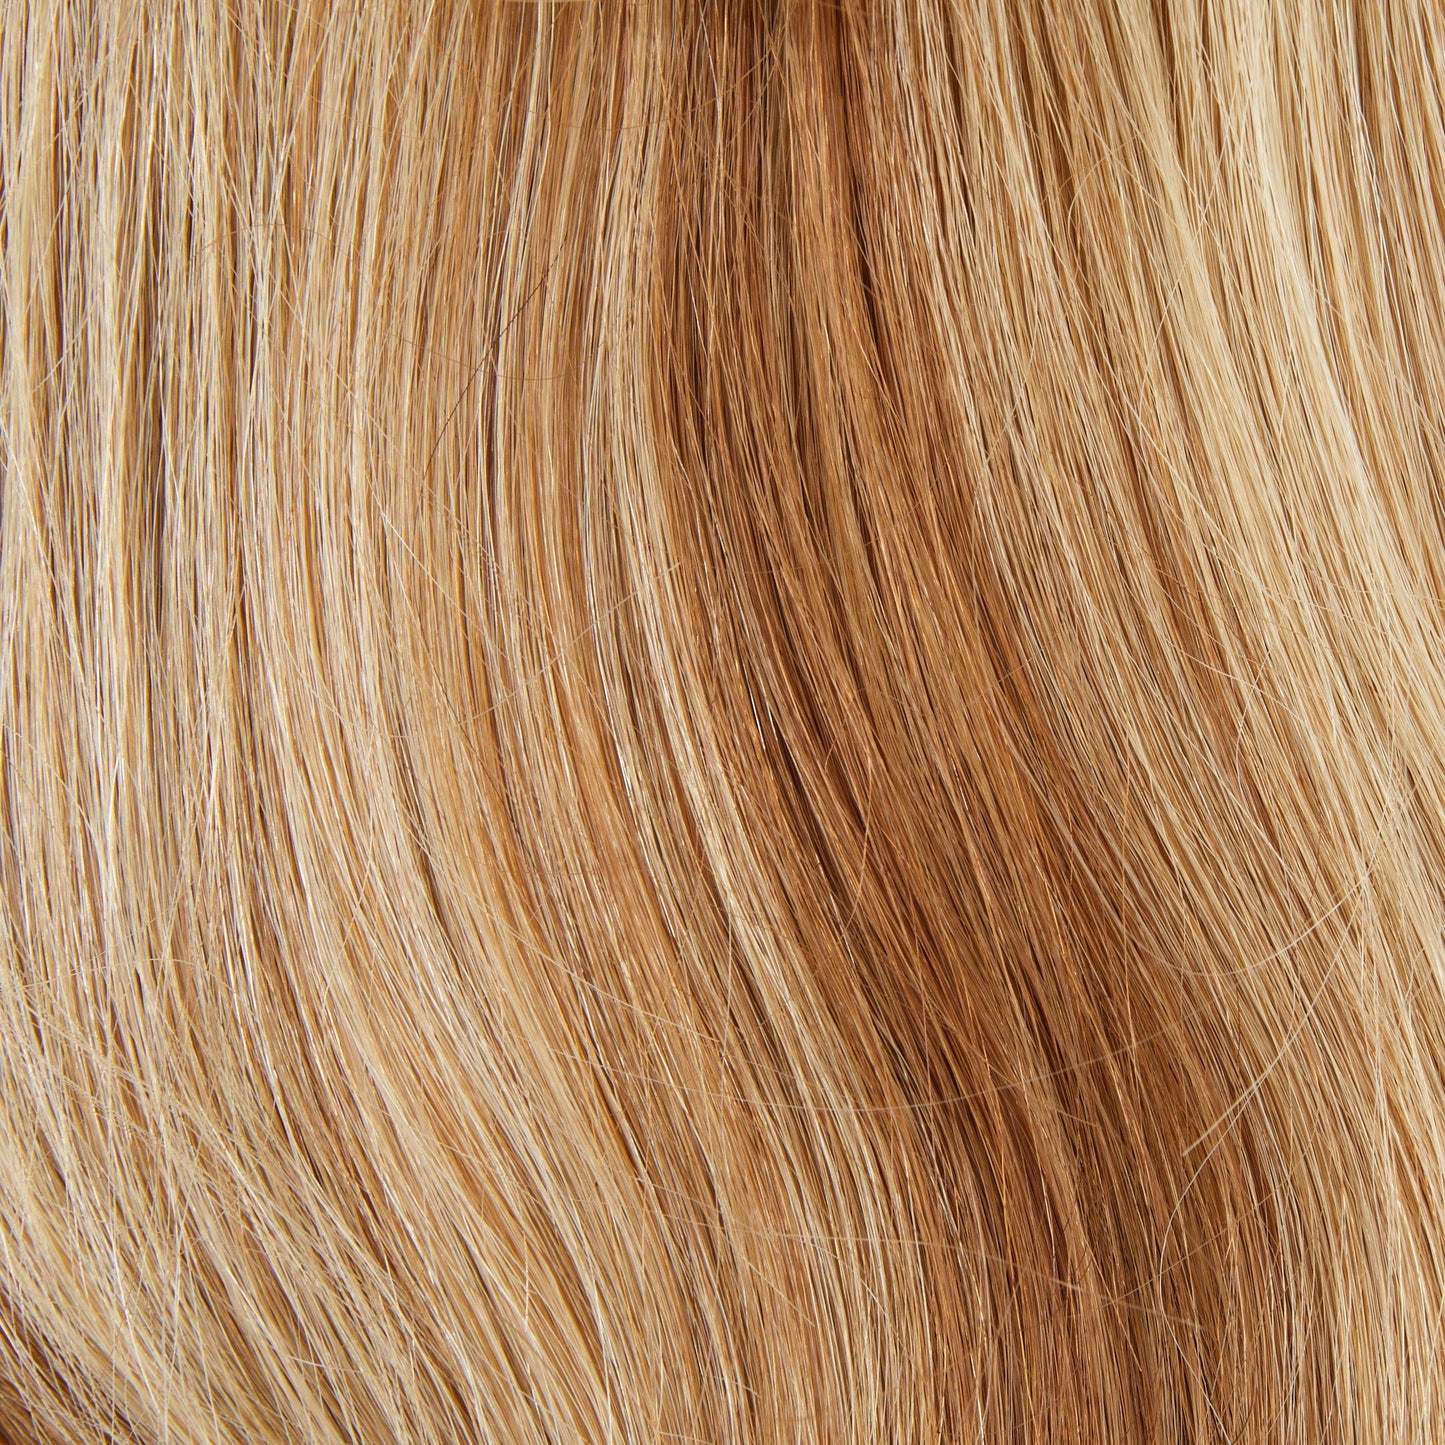 #6-613 Platinum Blond - Medium Brown LACE TOPPER